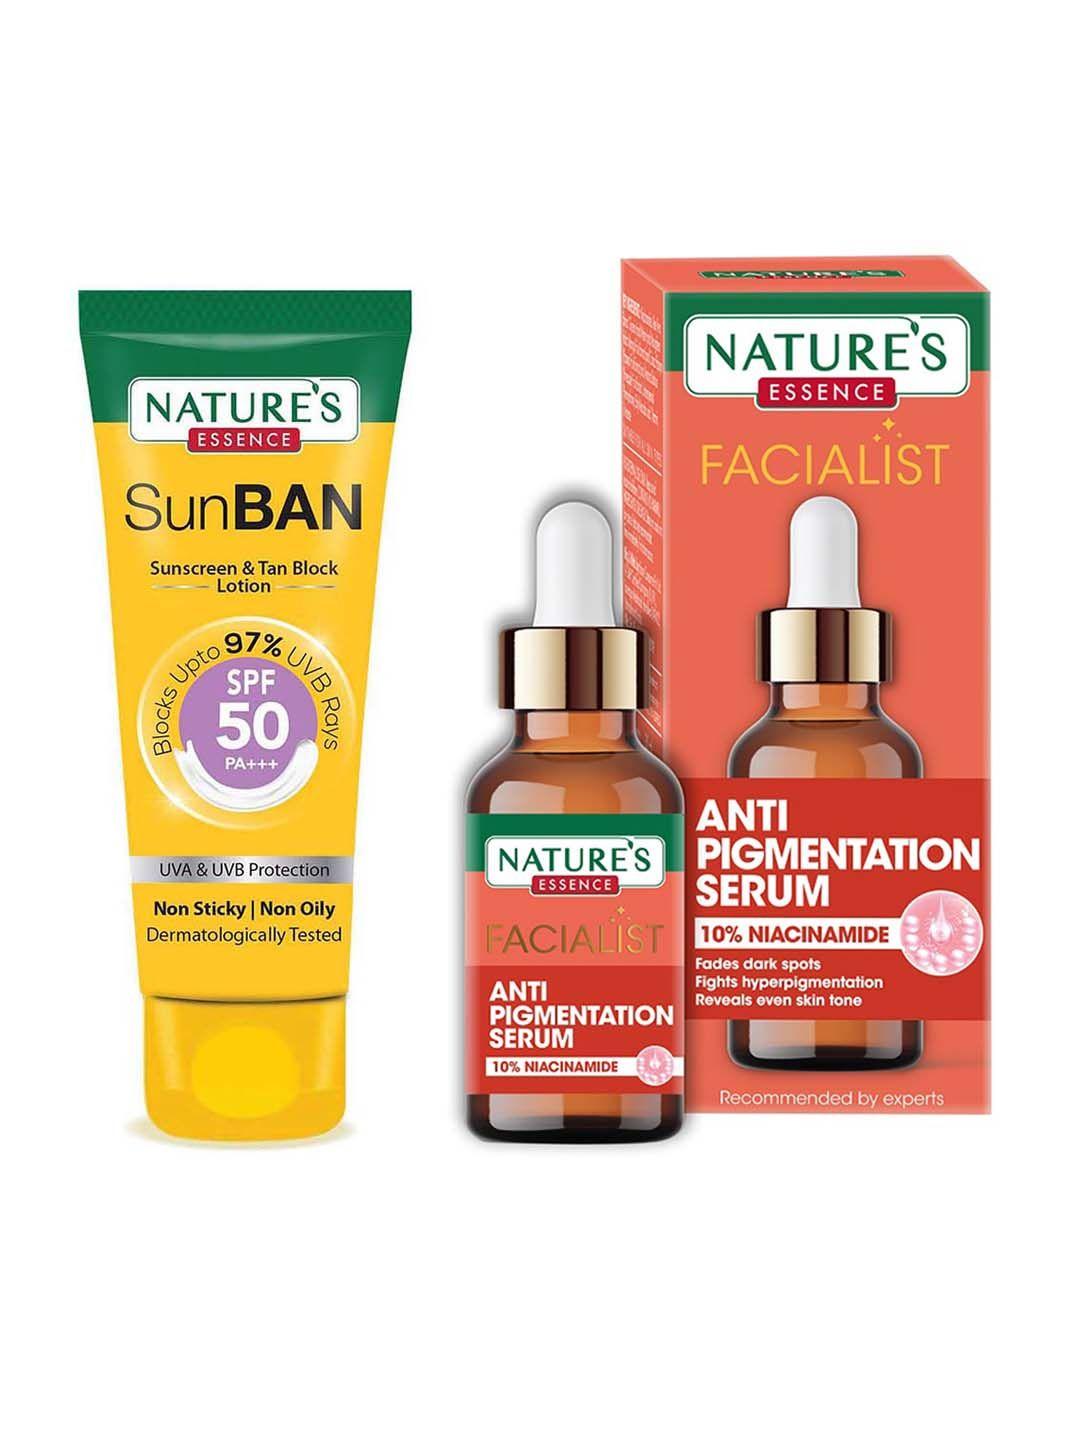 natures essence set of facialist anti-pigmentation serum & sunban spf50 pa+++ sunscreen